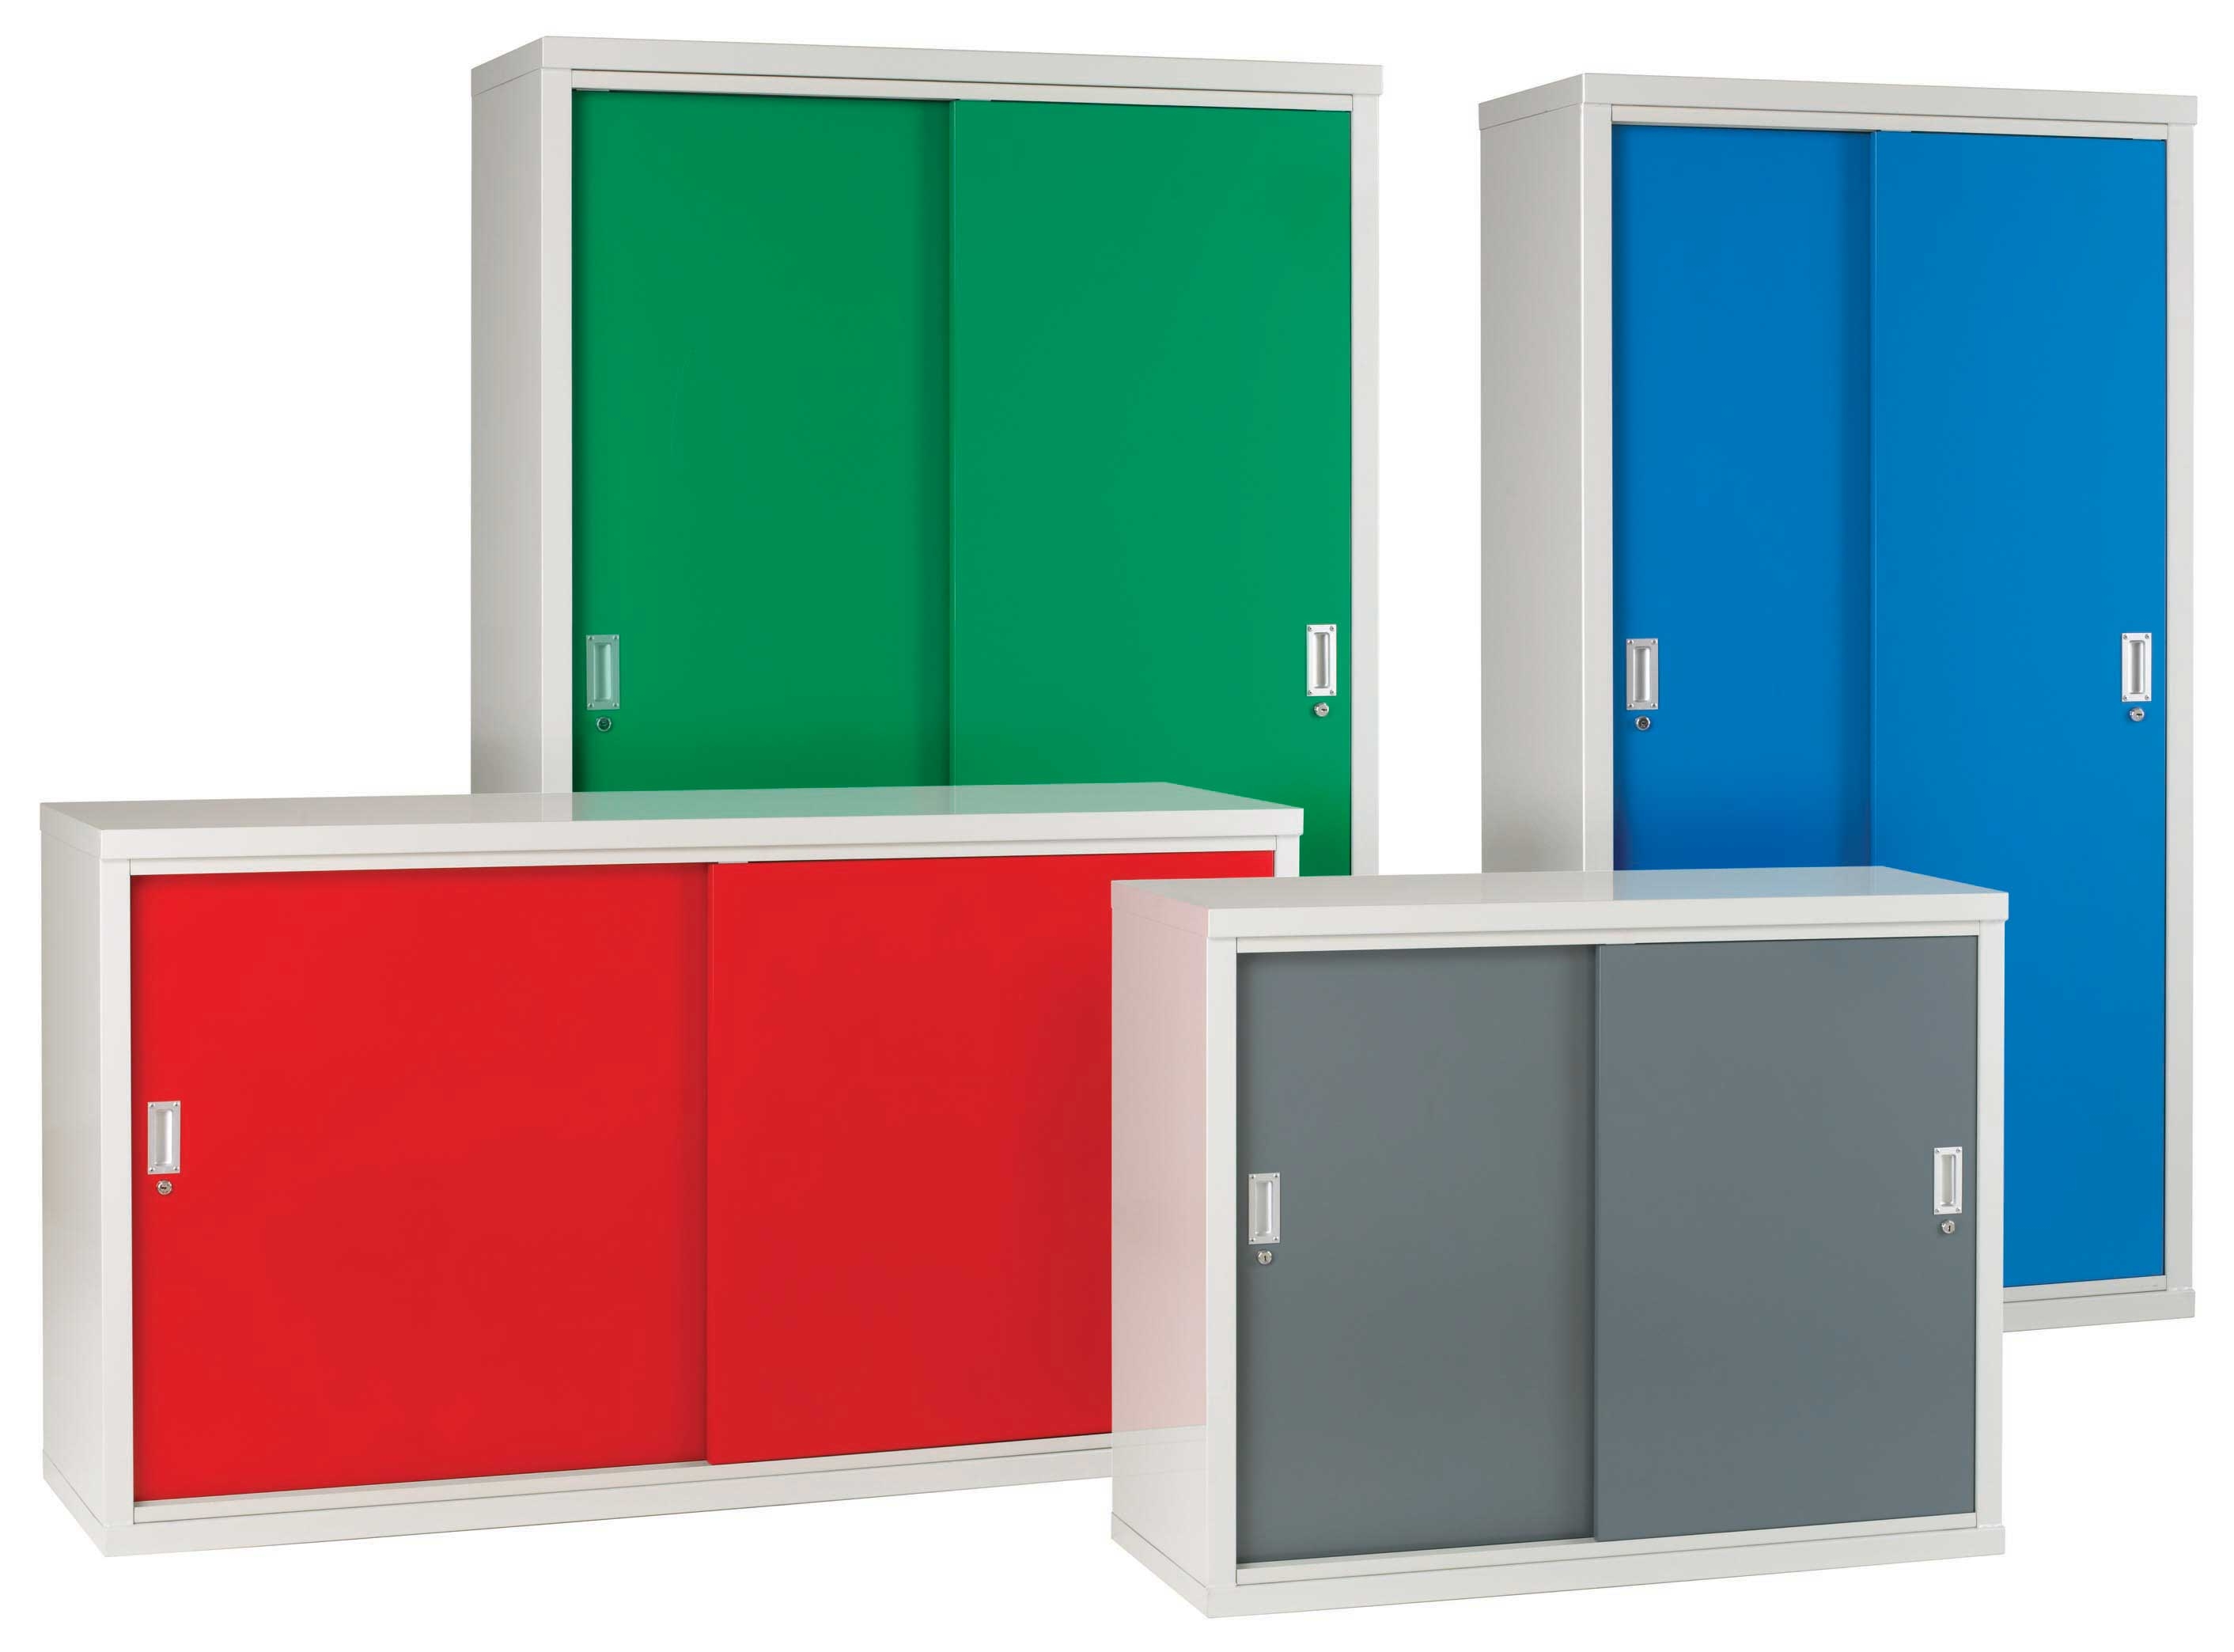 Metal Storage Cabinets With Sliding Doorsmetal storage cabinet with glass doors creative cabinets decoration